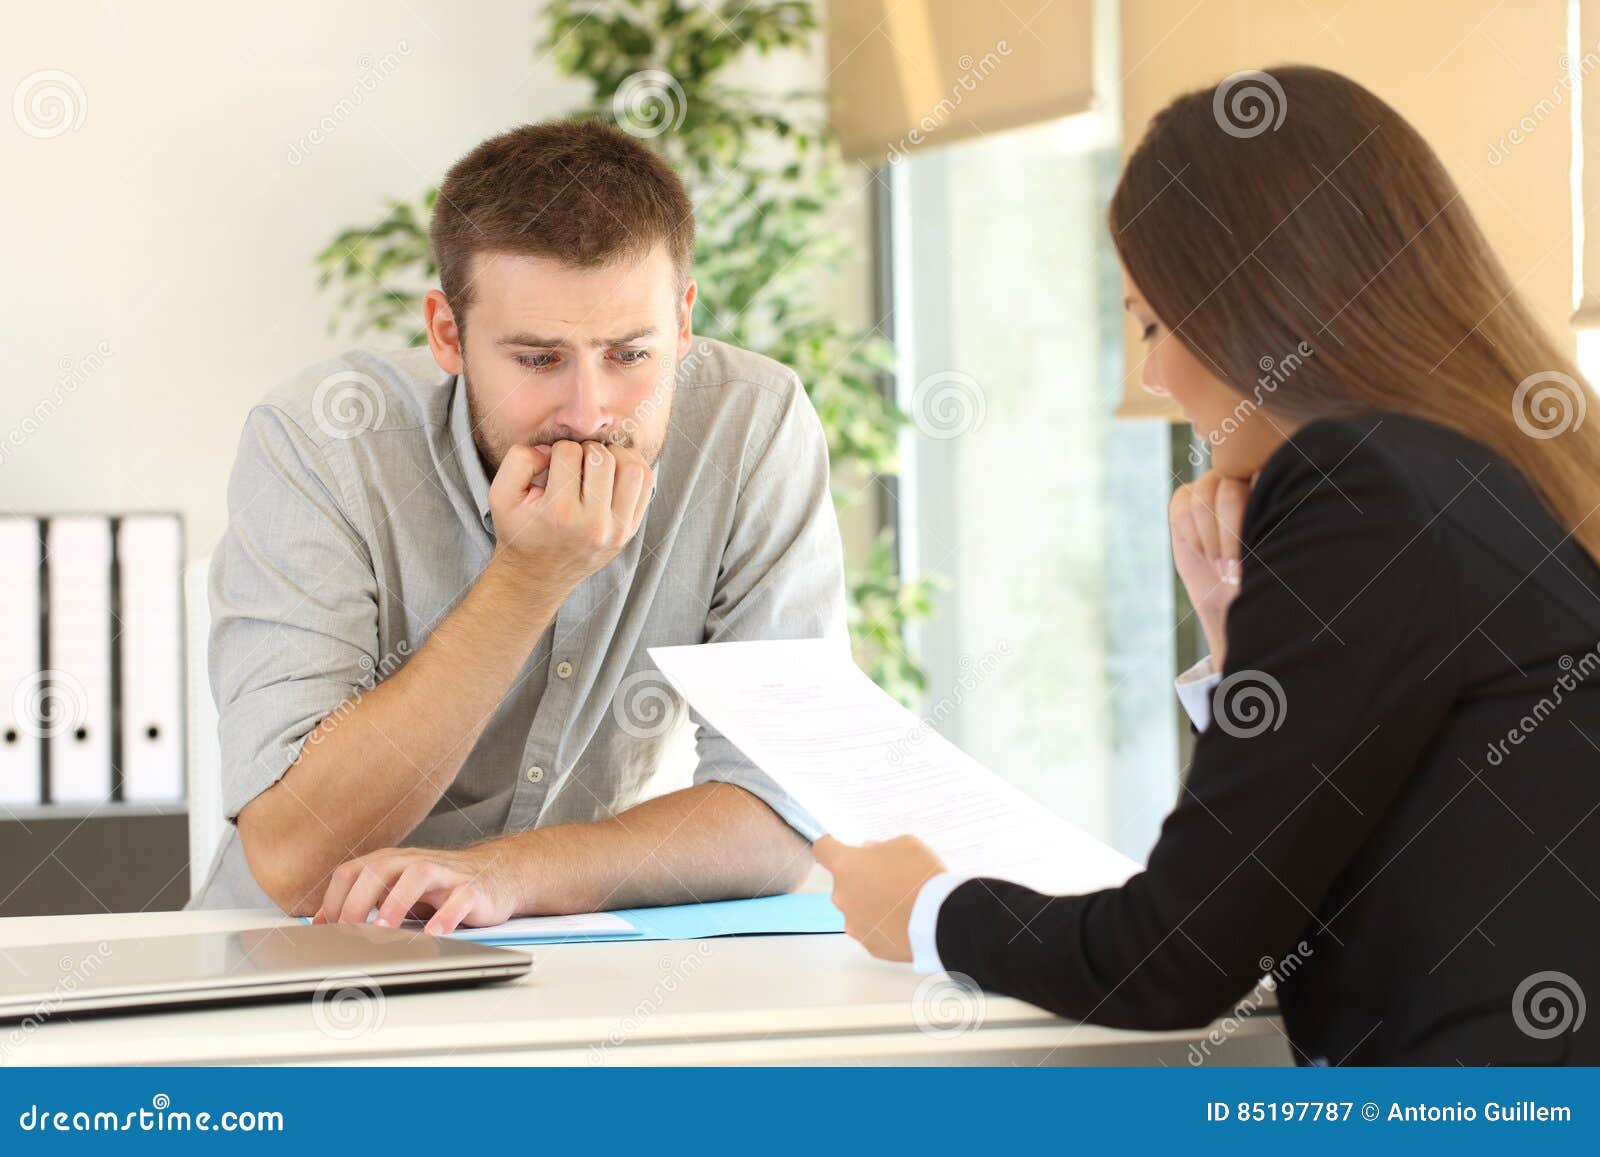 nervous man in a job interview